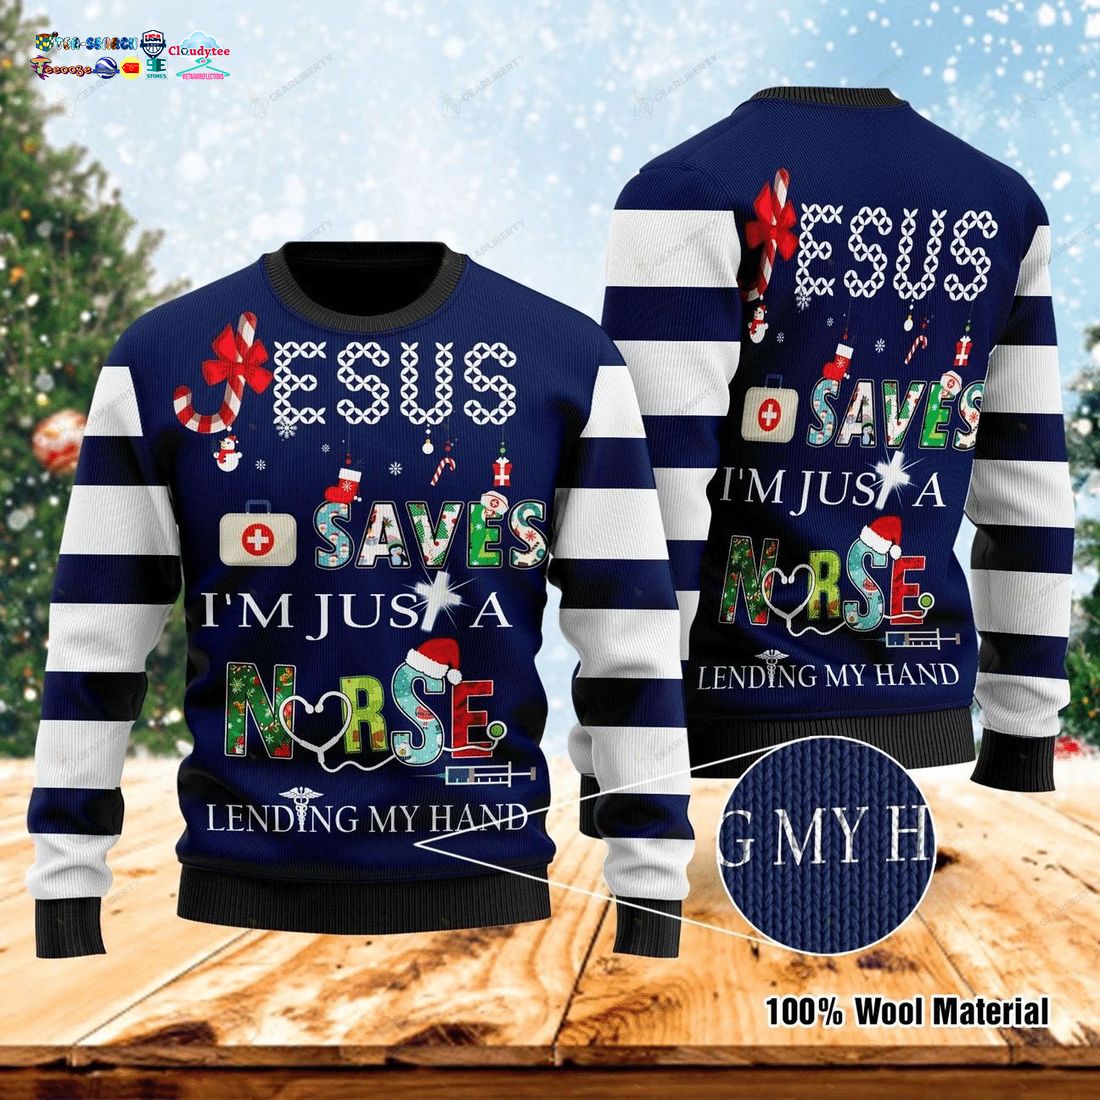 Jesus Saves I’m Just A Nurse Lending My Hand Ugly Christmas Sweater